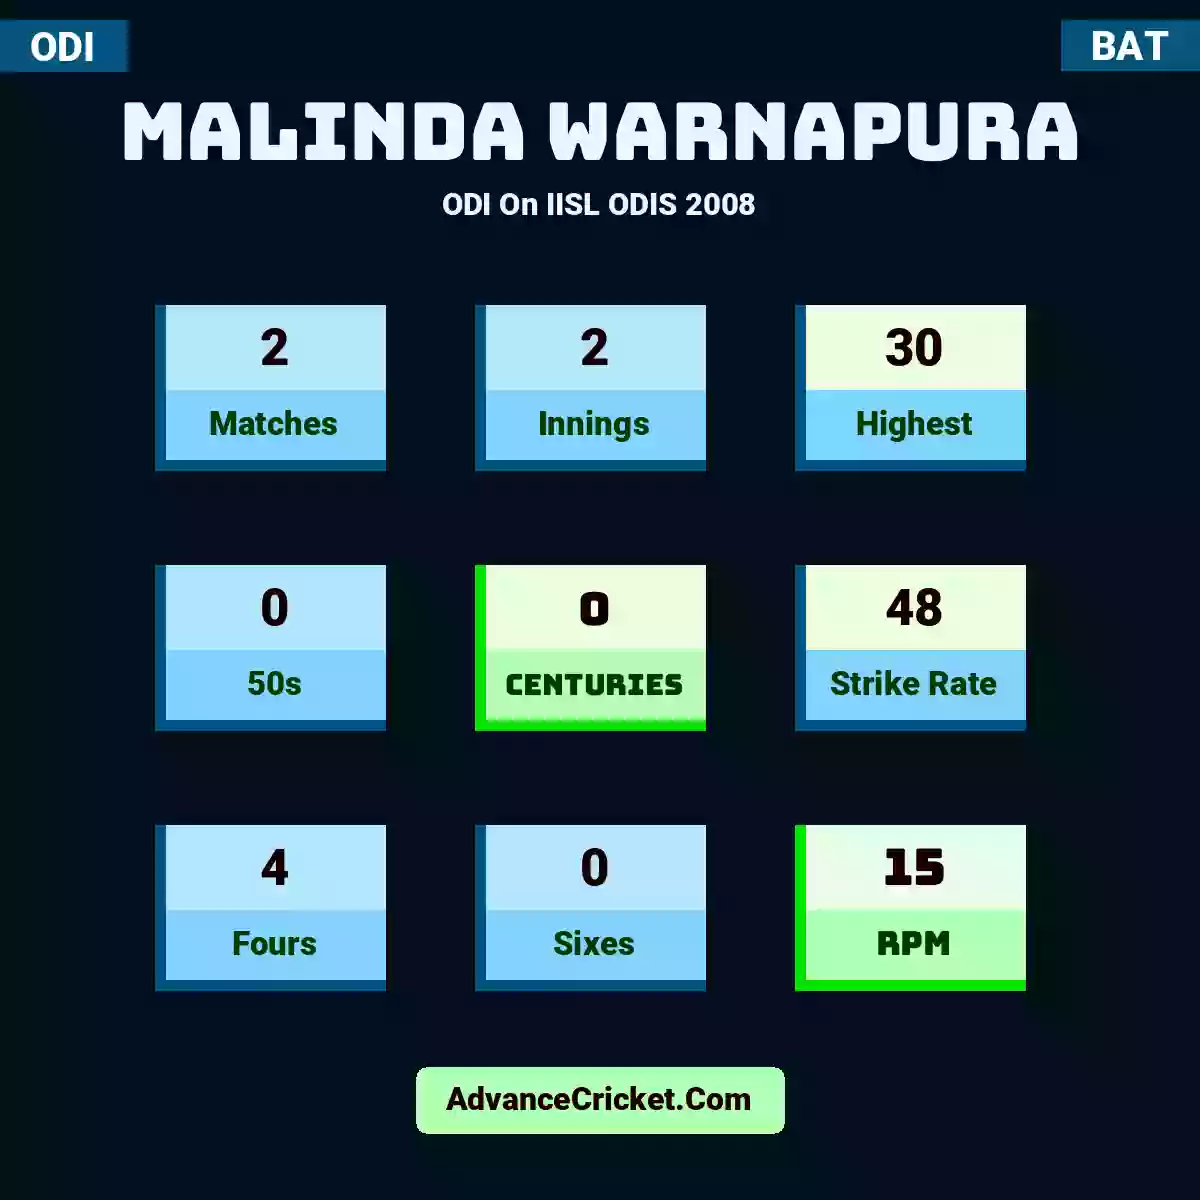 Malinda Warnapura ODI  On IISL ODIS 2008, Malinda Warnapura played 2 matches, scored 30 runs as highest, 0 half-centuries, and 0 centuries, with a strike rate of 48. M.Warnapura hit 4 fours and 0 sixes, with an RPM of 15.